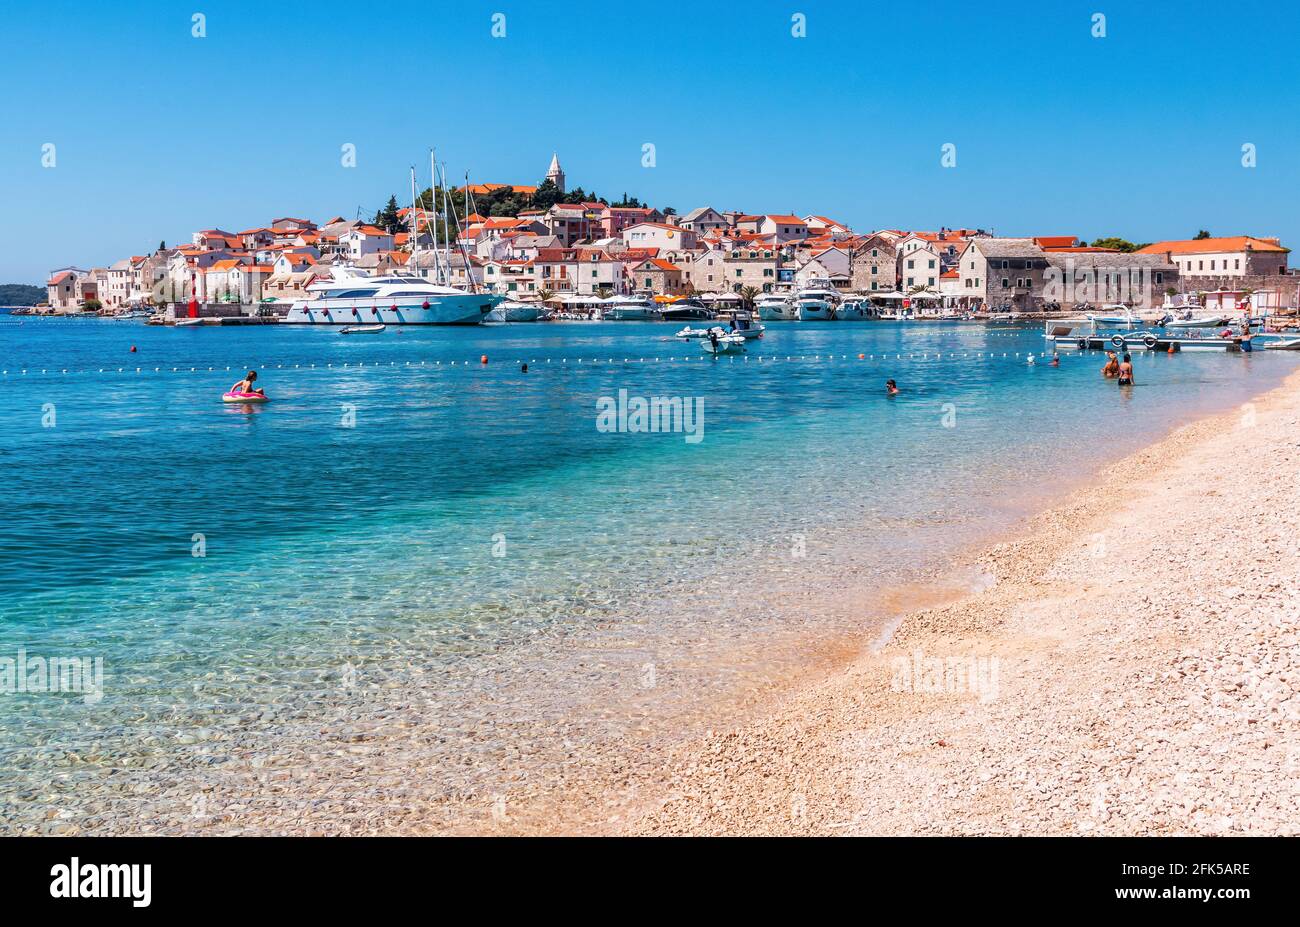 Primosten, Sibenik Knin County, Croatia. View of the old town and beach in Primosten town, Dalmatia, Croatia. Stock Photo